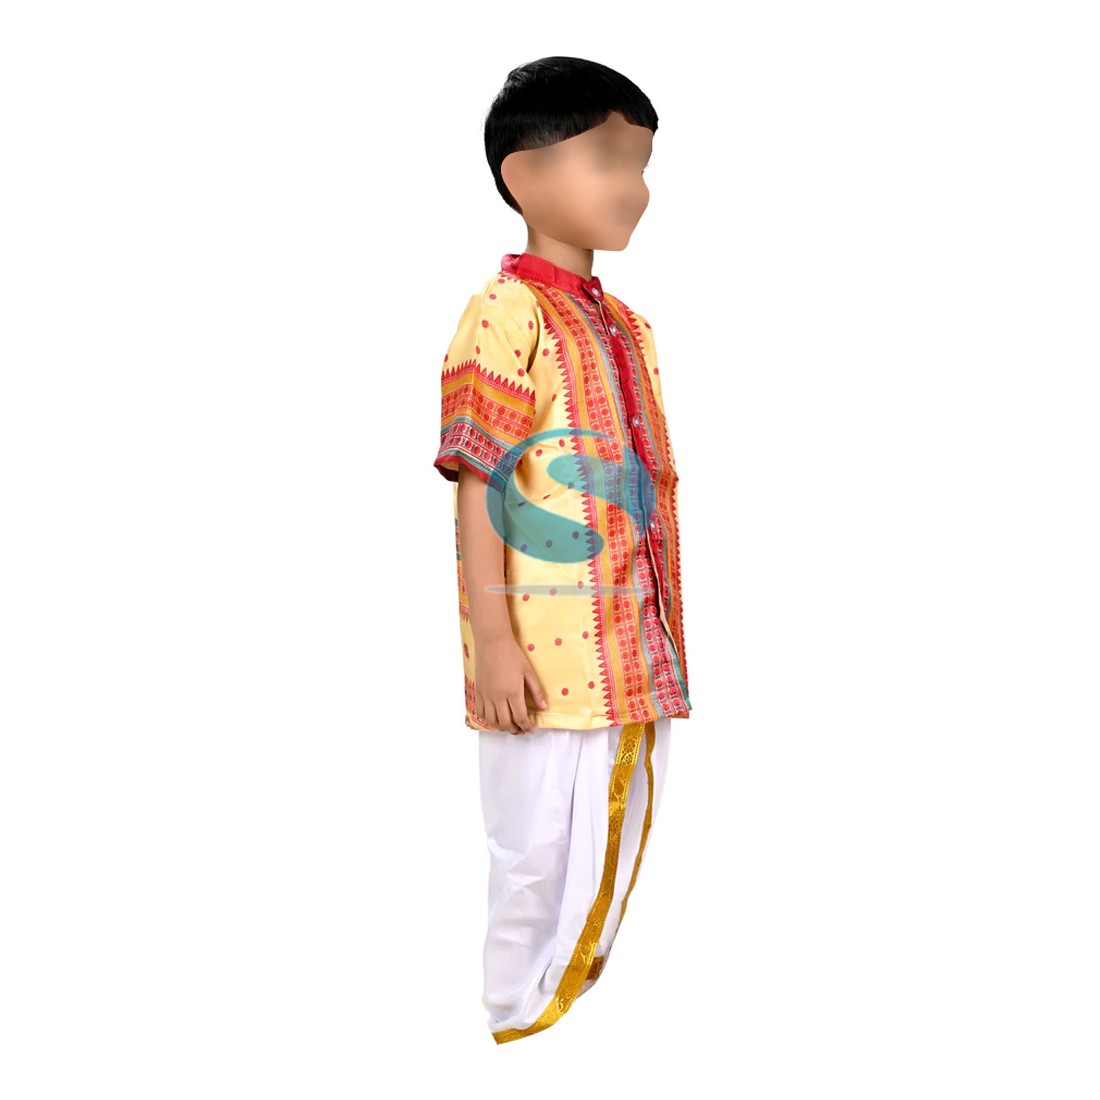 Boys Dress Shirts - Buy Boys Dress Shirts online at Best Prices in India |  Flipkart.com